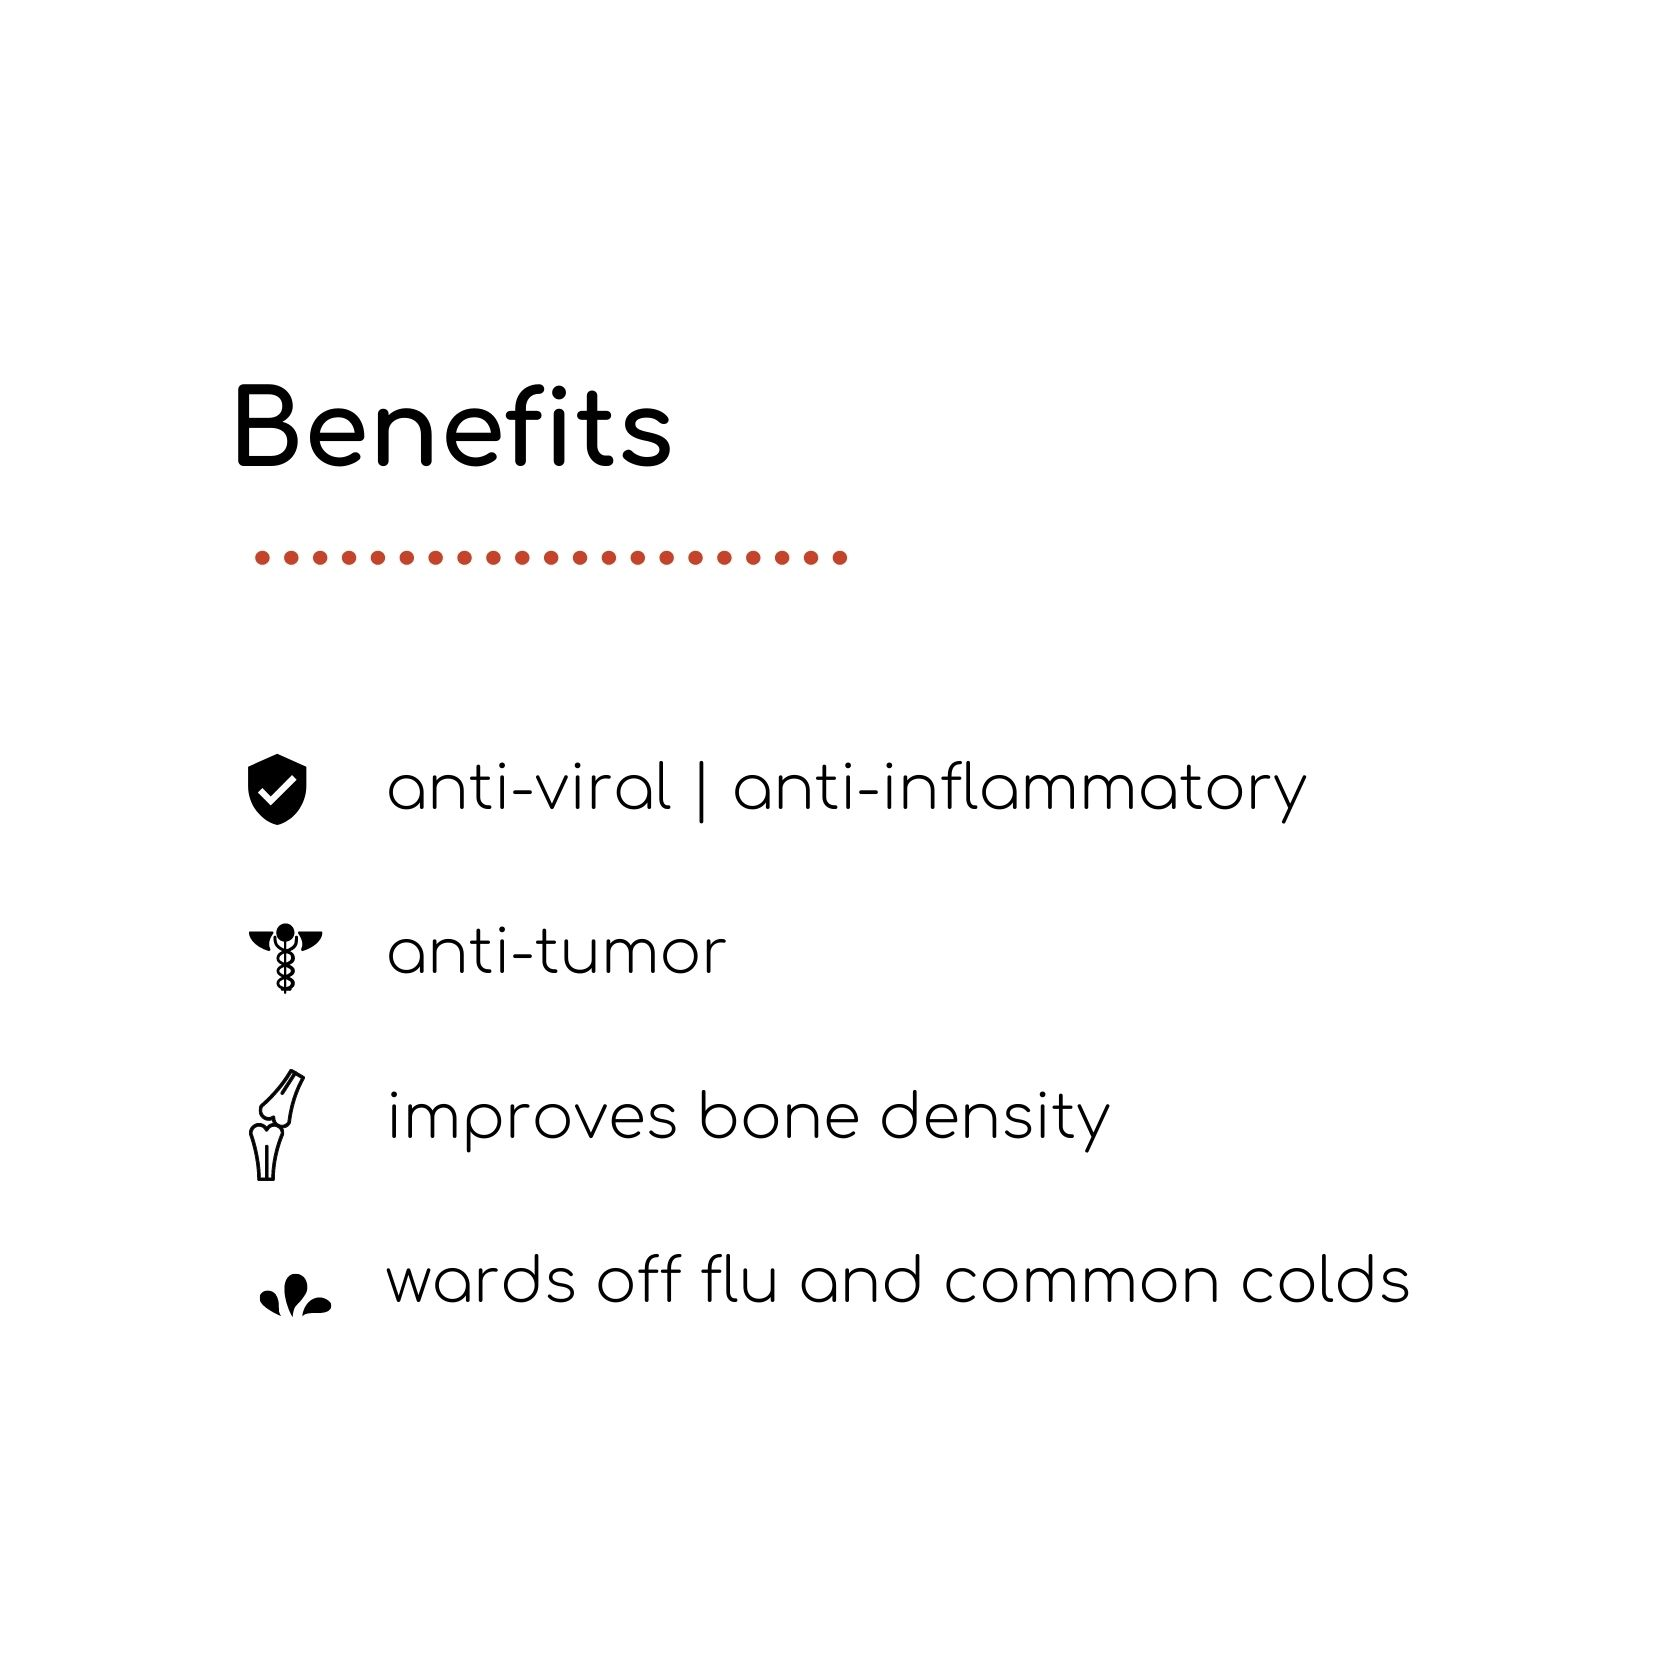 Infographic list of benefits